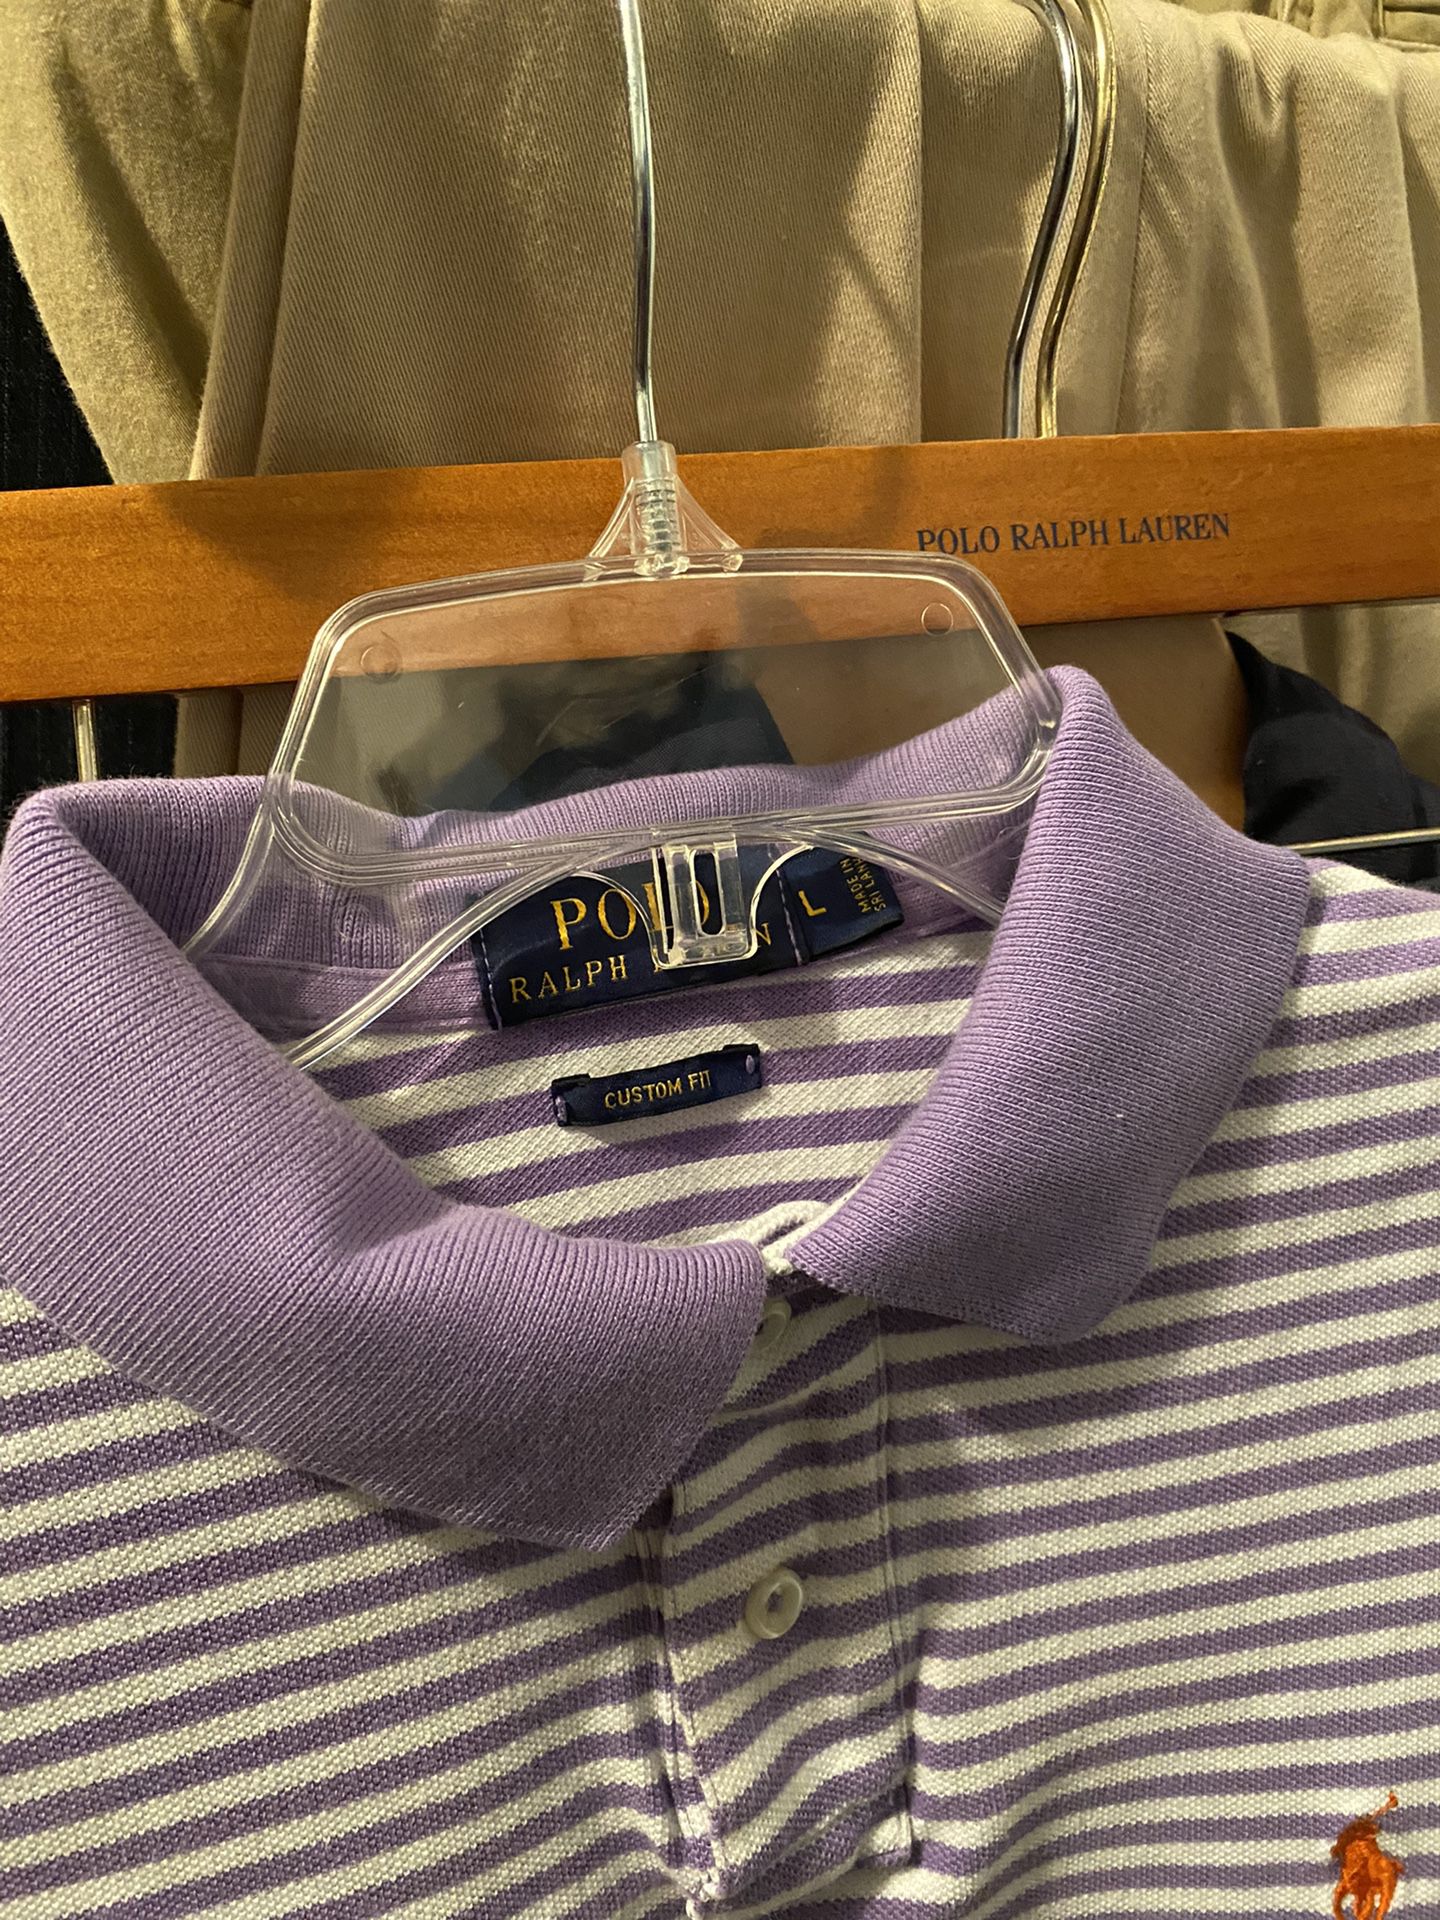 Ralph Lauren Polo Men’s Custom Fit Striped Shirt - Sz Large 